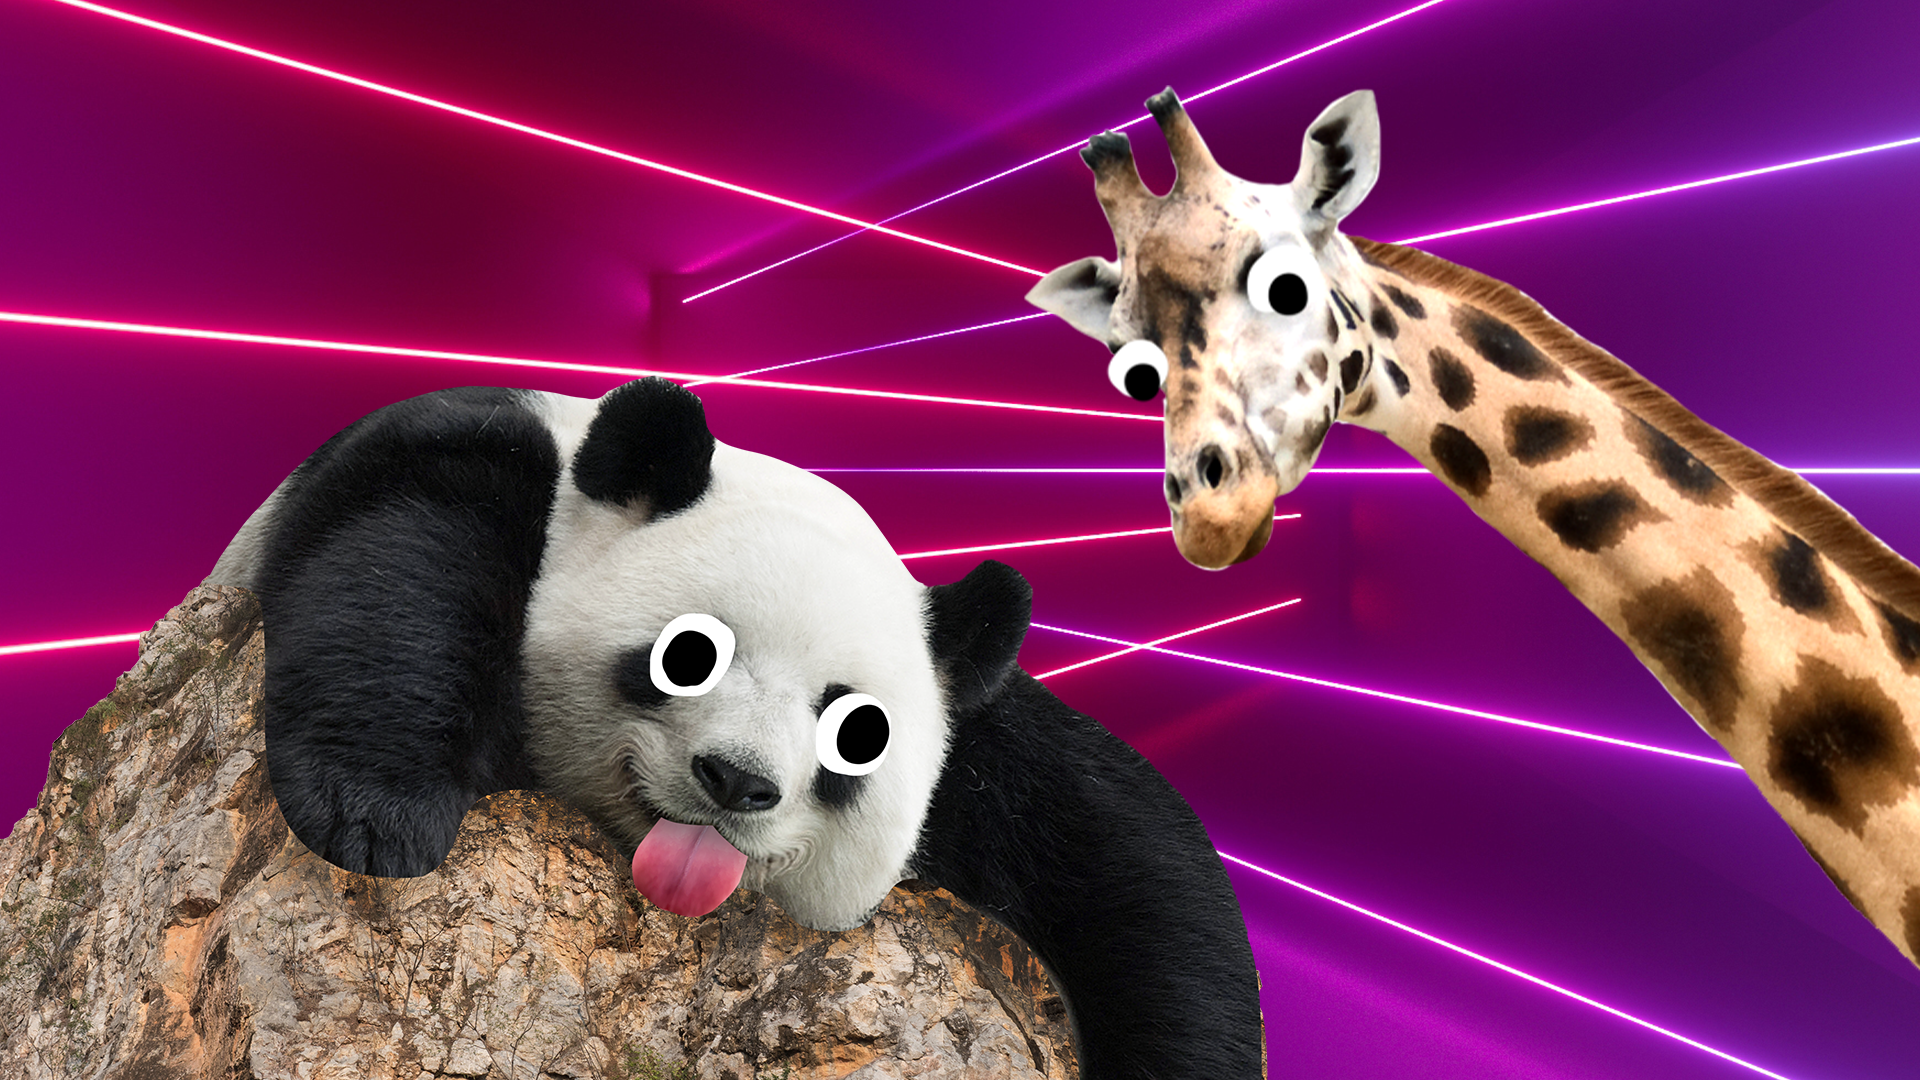 Panda and giraffe on laser background